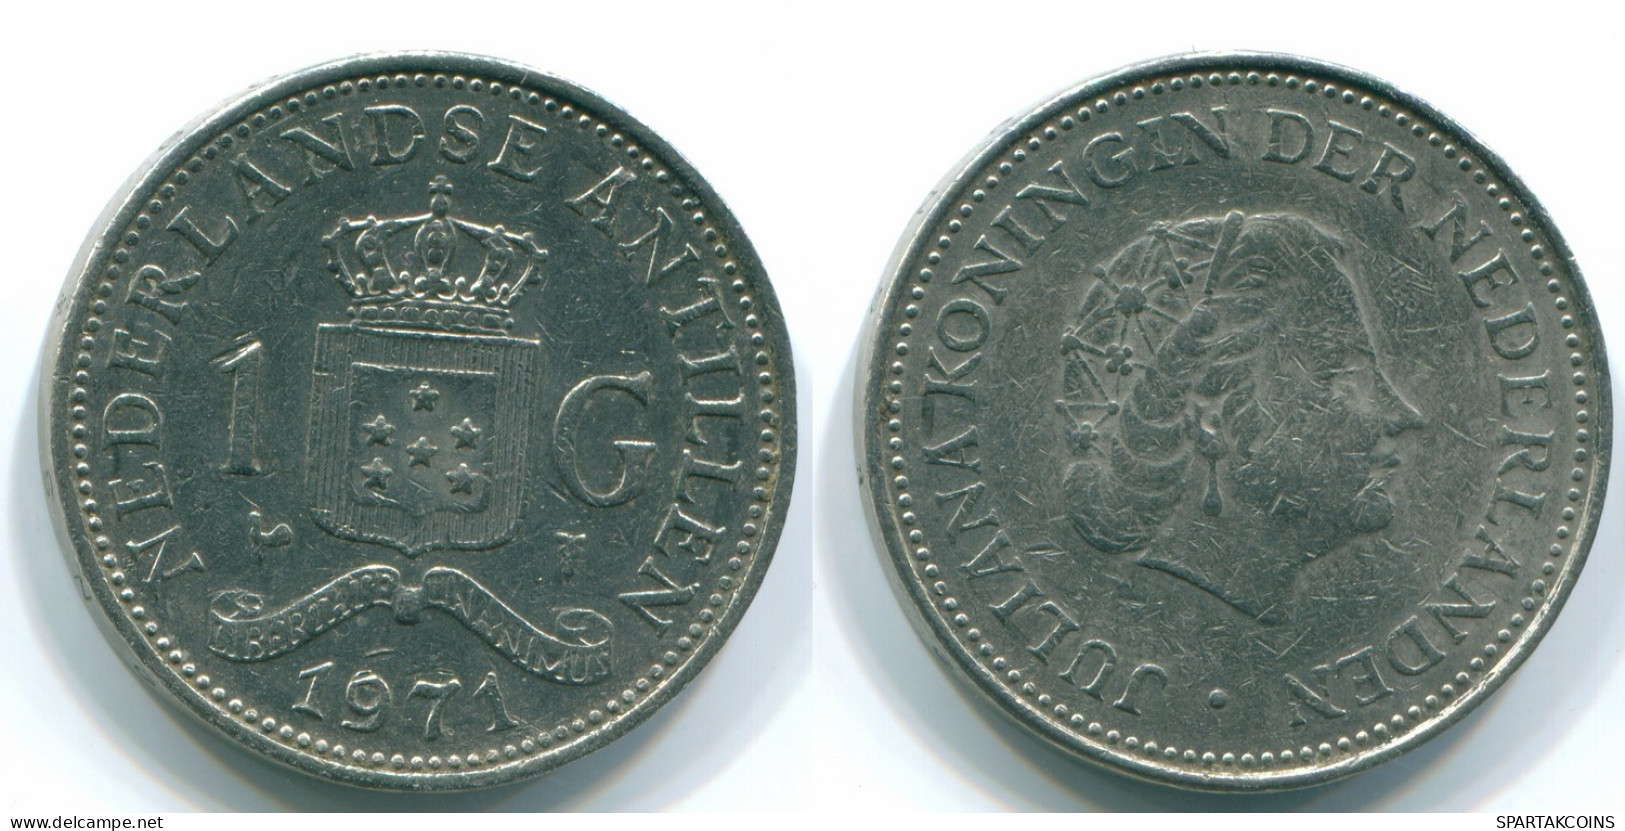 1 GULDEN 1971 NIEDERLÄNDISCHE ANTILLEN Nickel Koloniale Münze #S12005.D.A - Antilles Néerlandaises